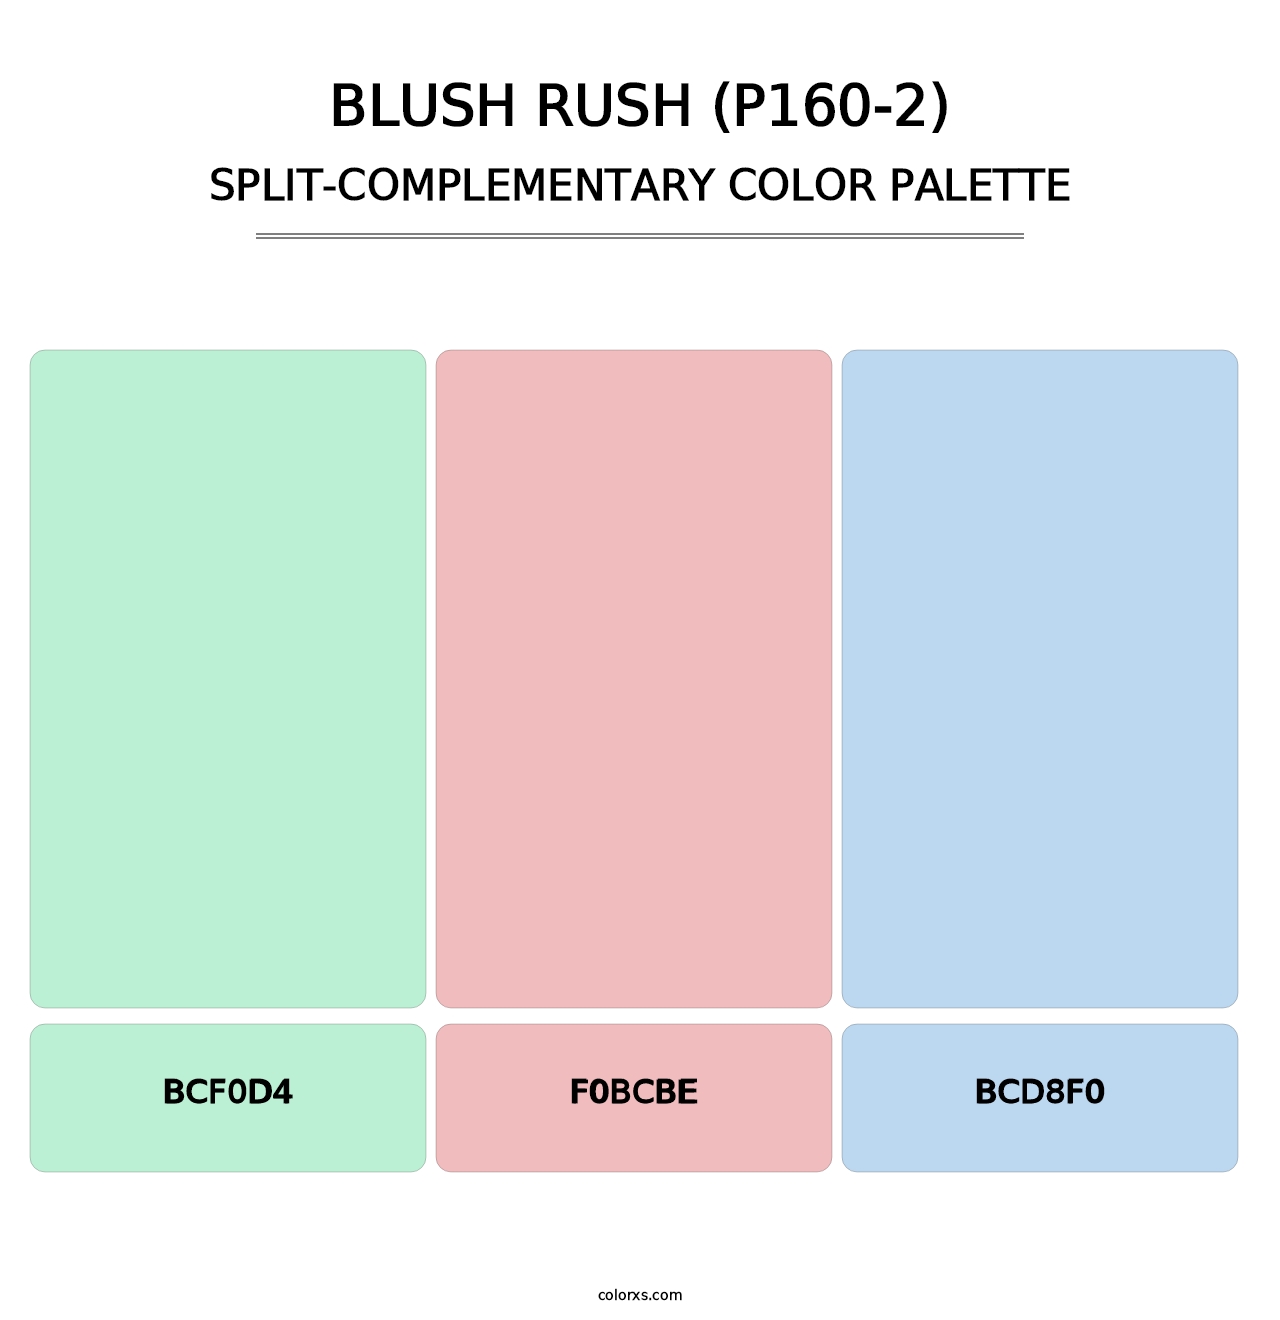 Blush Rush (P160-2) - Split-Complementary Color Palette